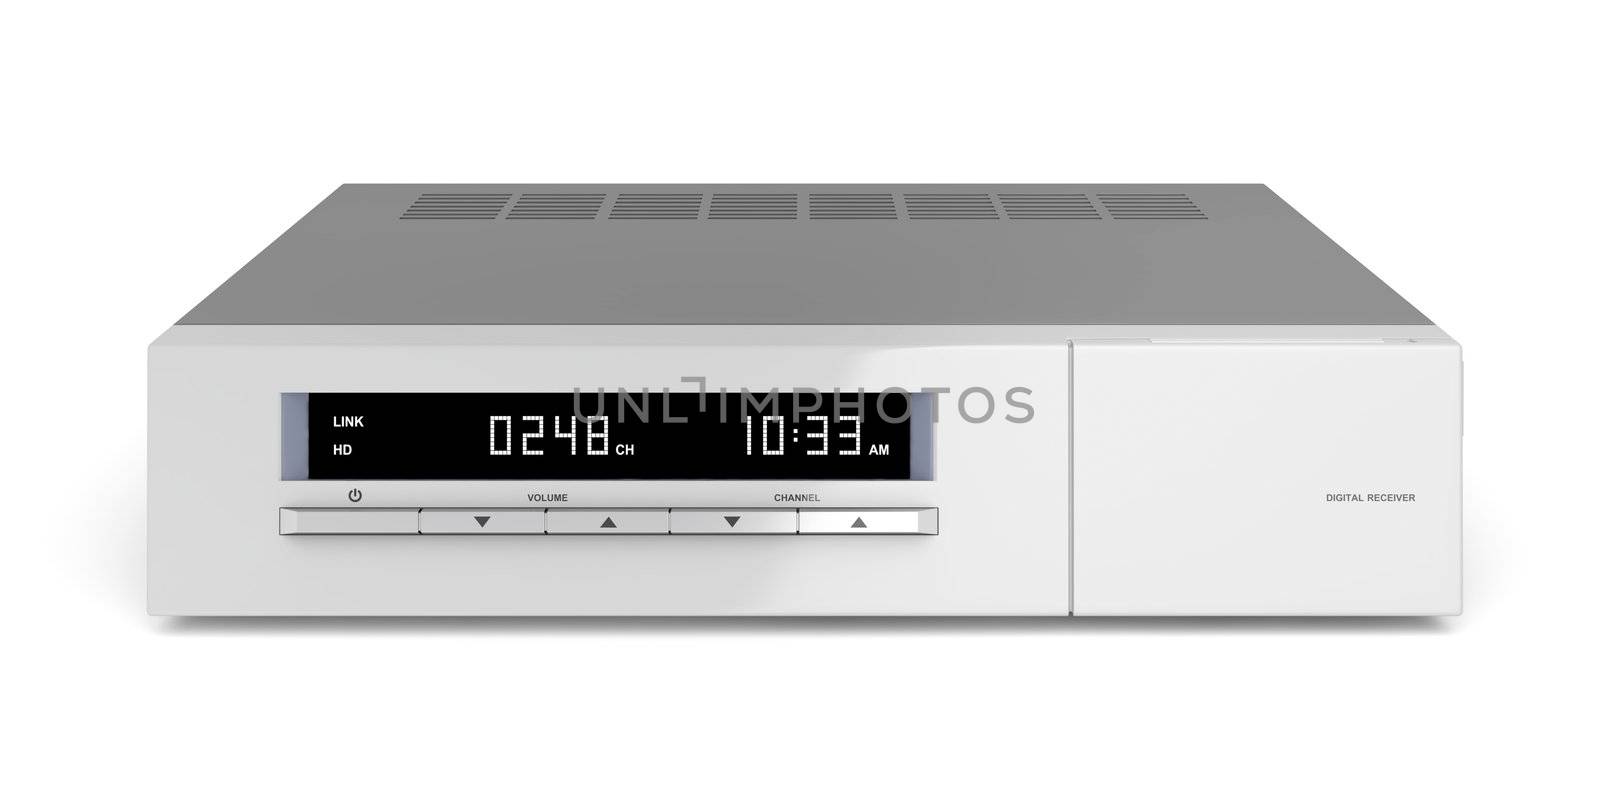 Digital receiver on white background